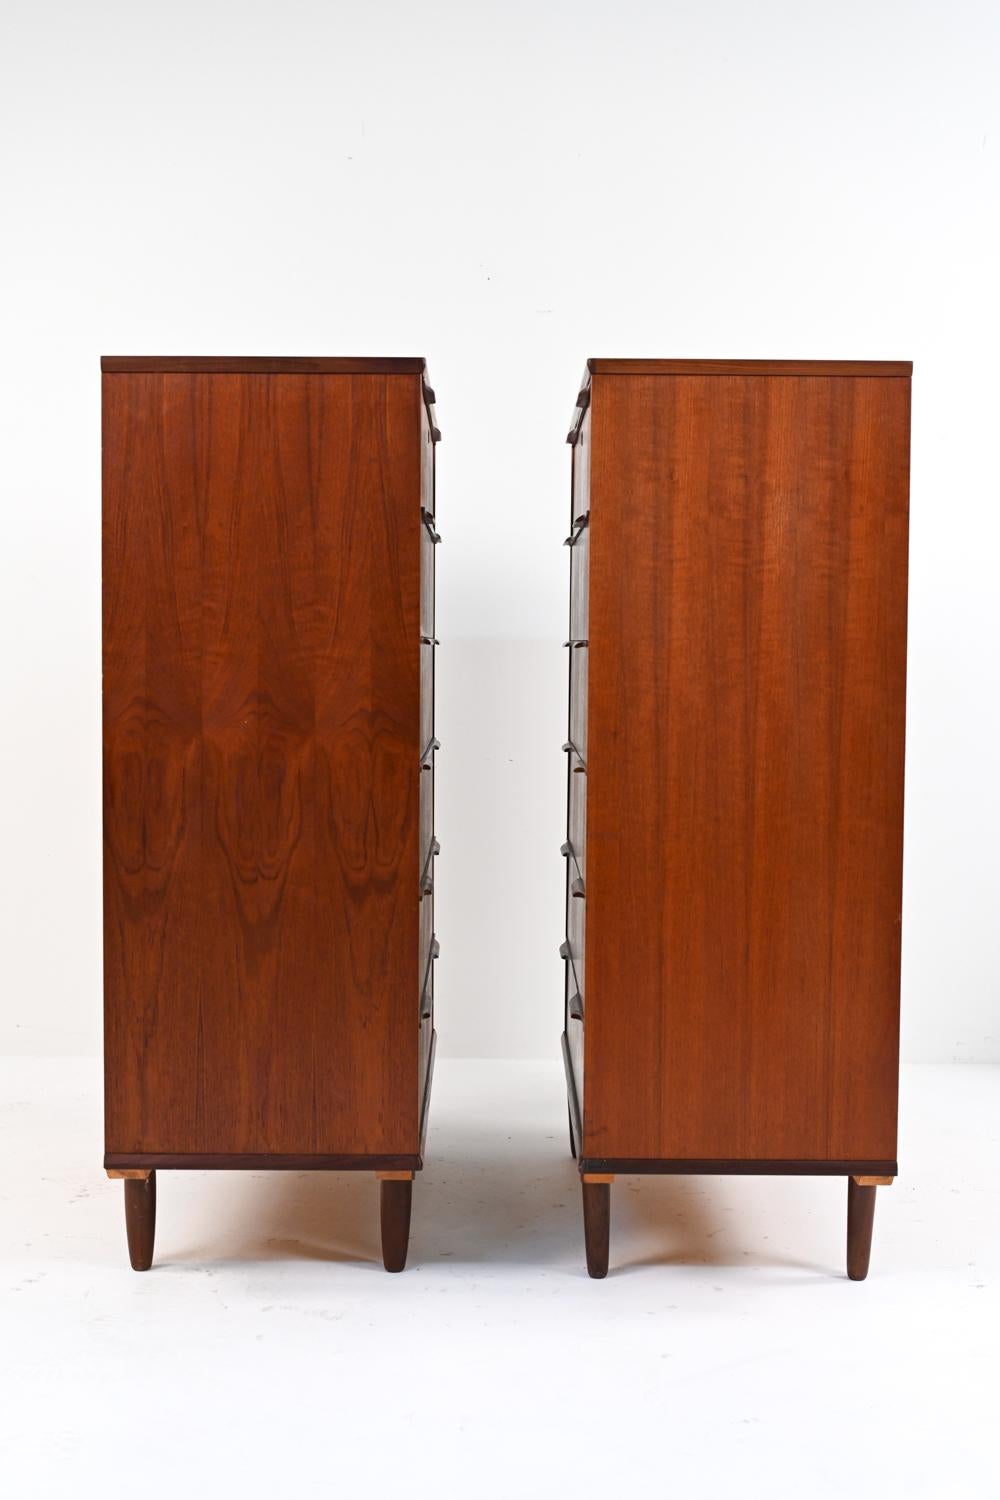 Pair of Danish Modern Teak Tallboy Dressers, c. 1960's For Sale 5